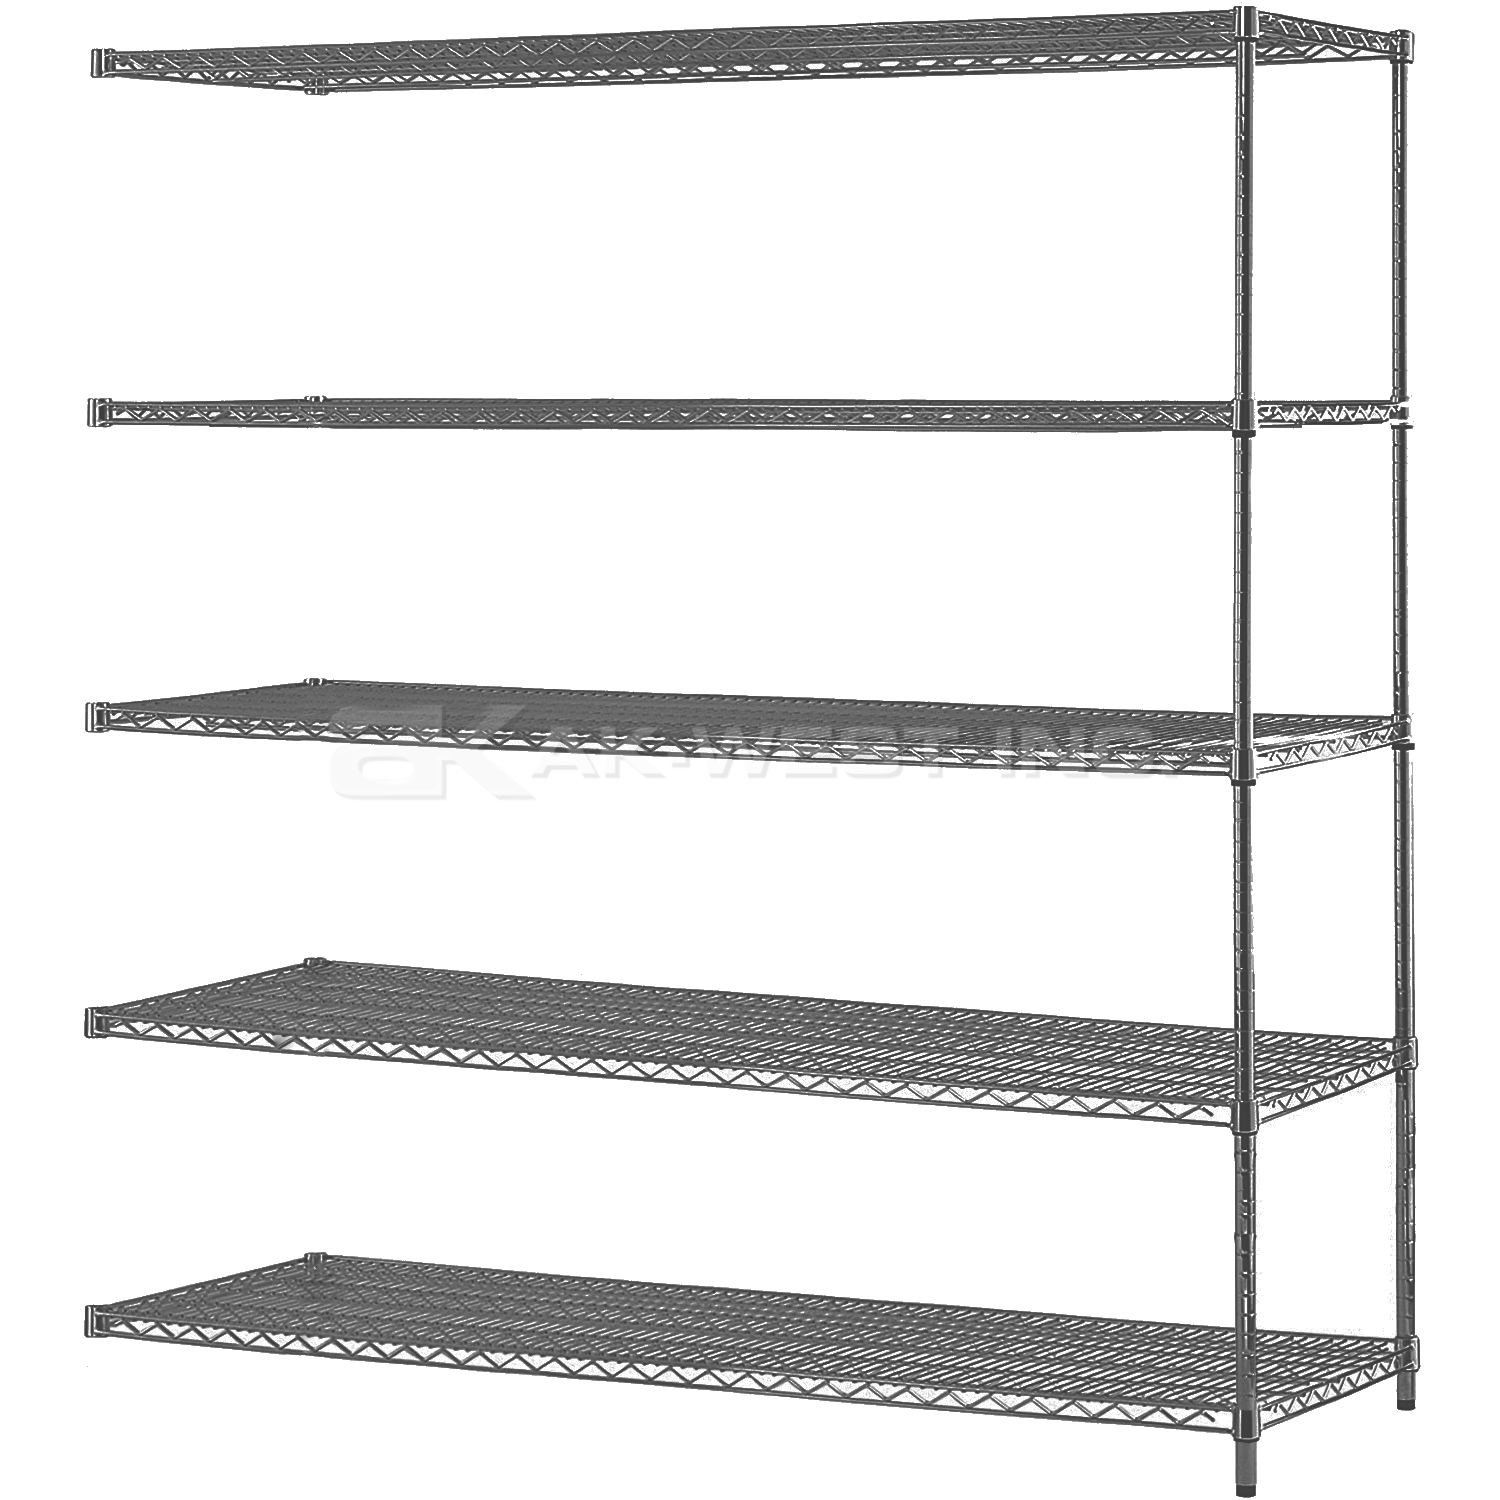 Grey, 24"D x 72"W x 74"H, 6 Shelf, Wire Shelving Adder Kit